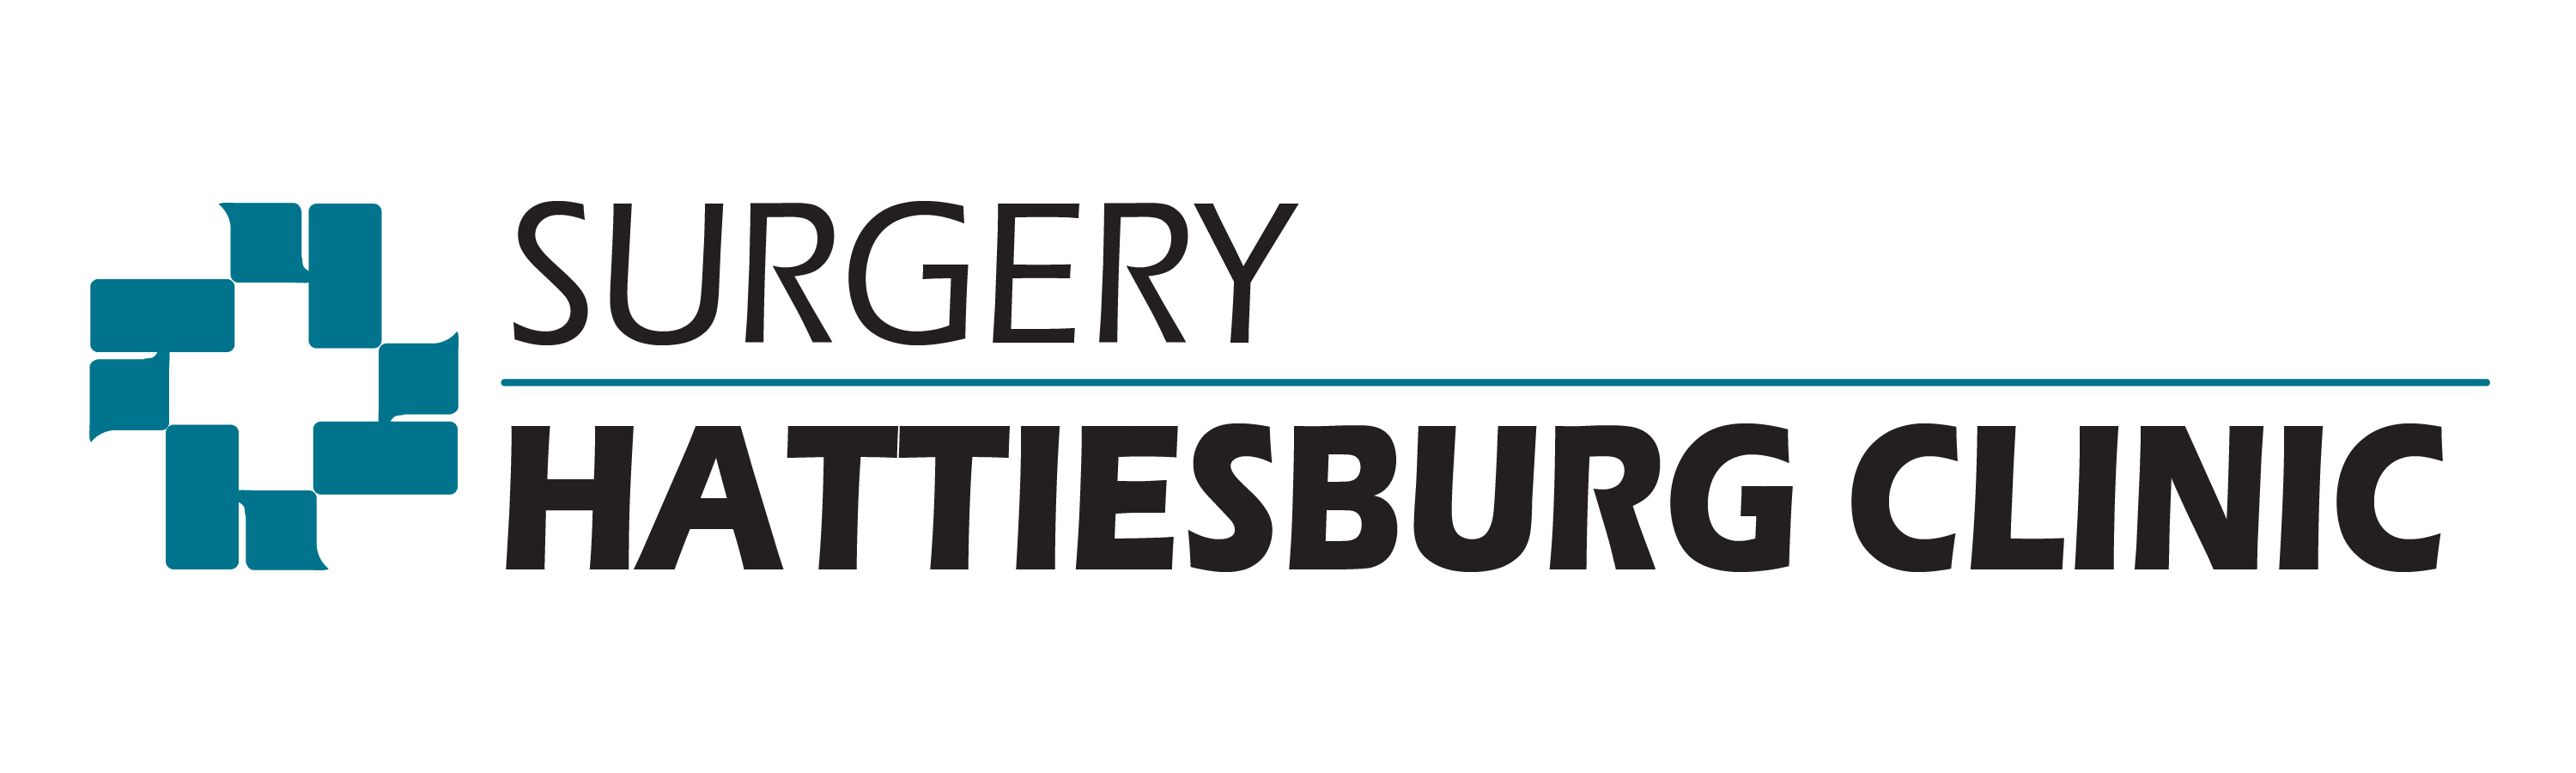 Surgery logo